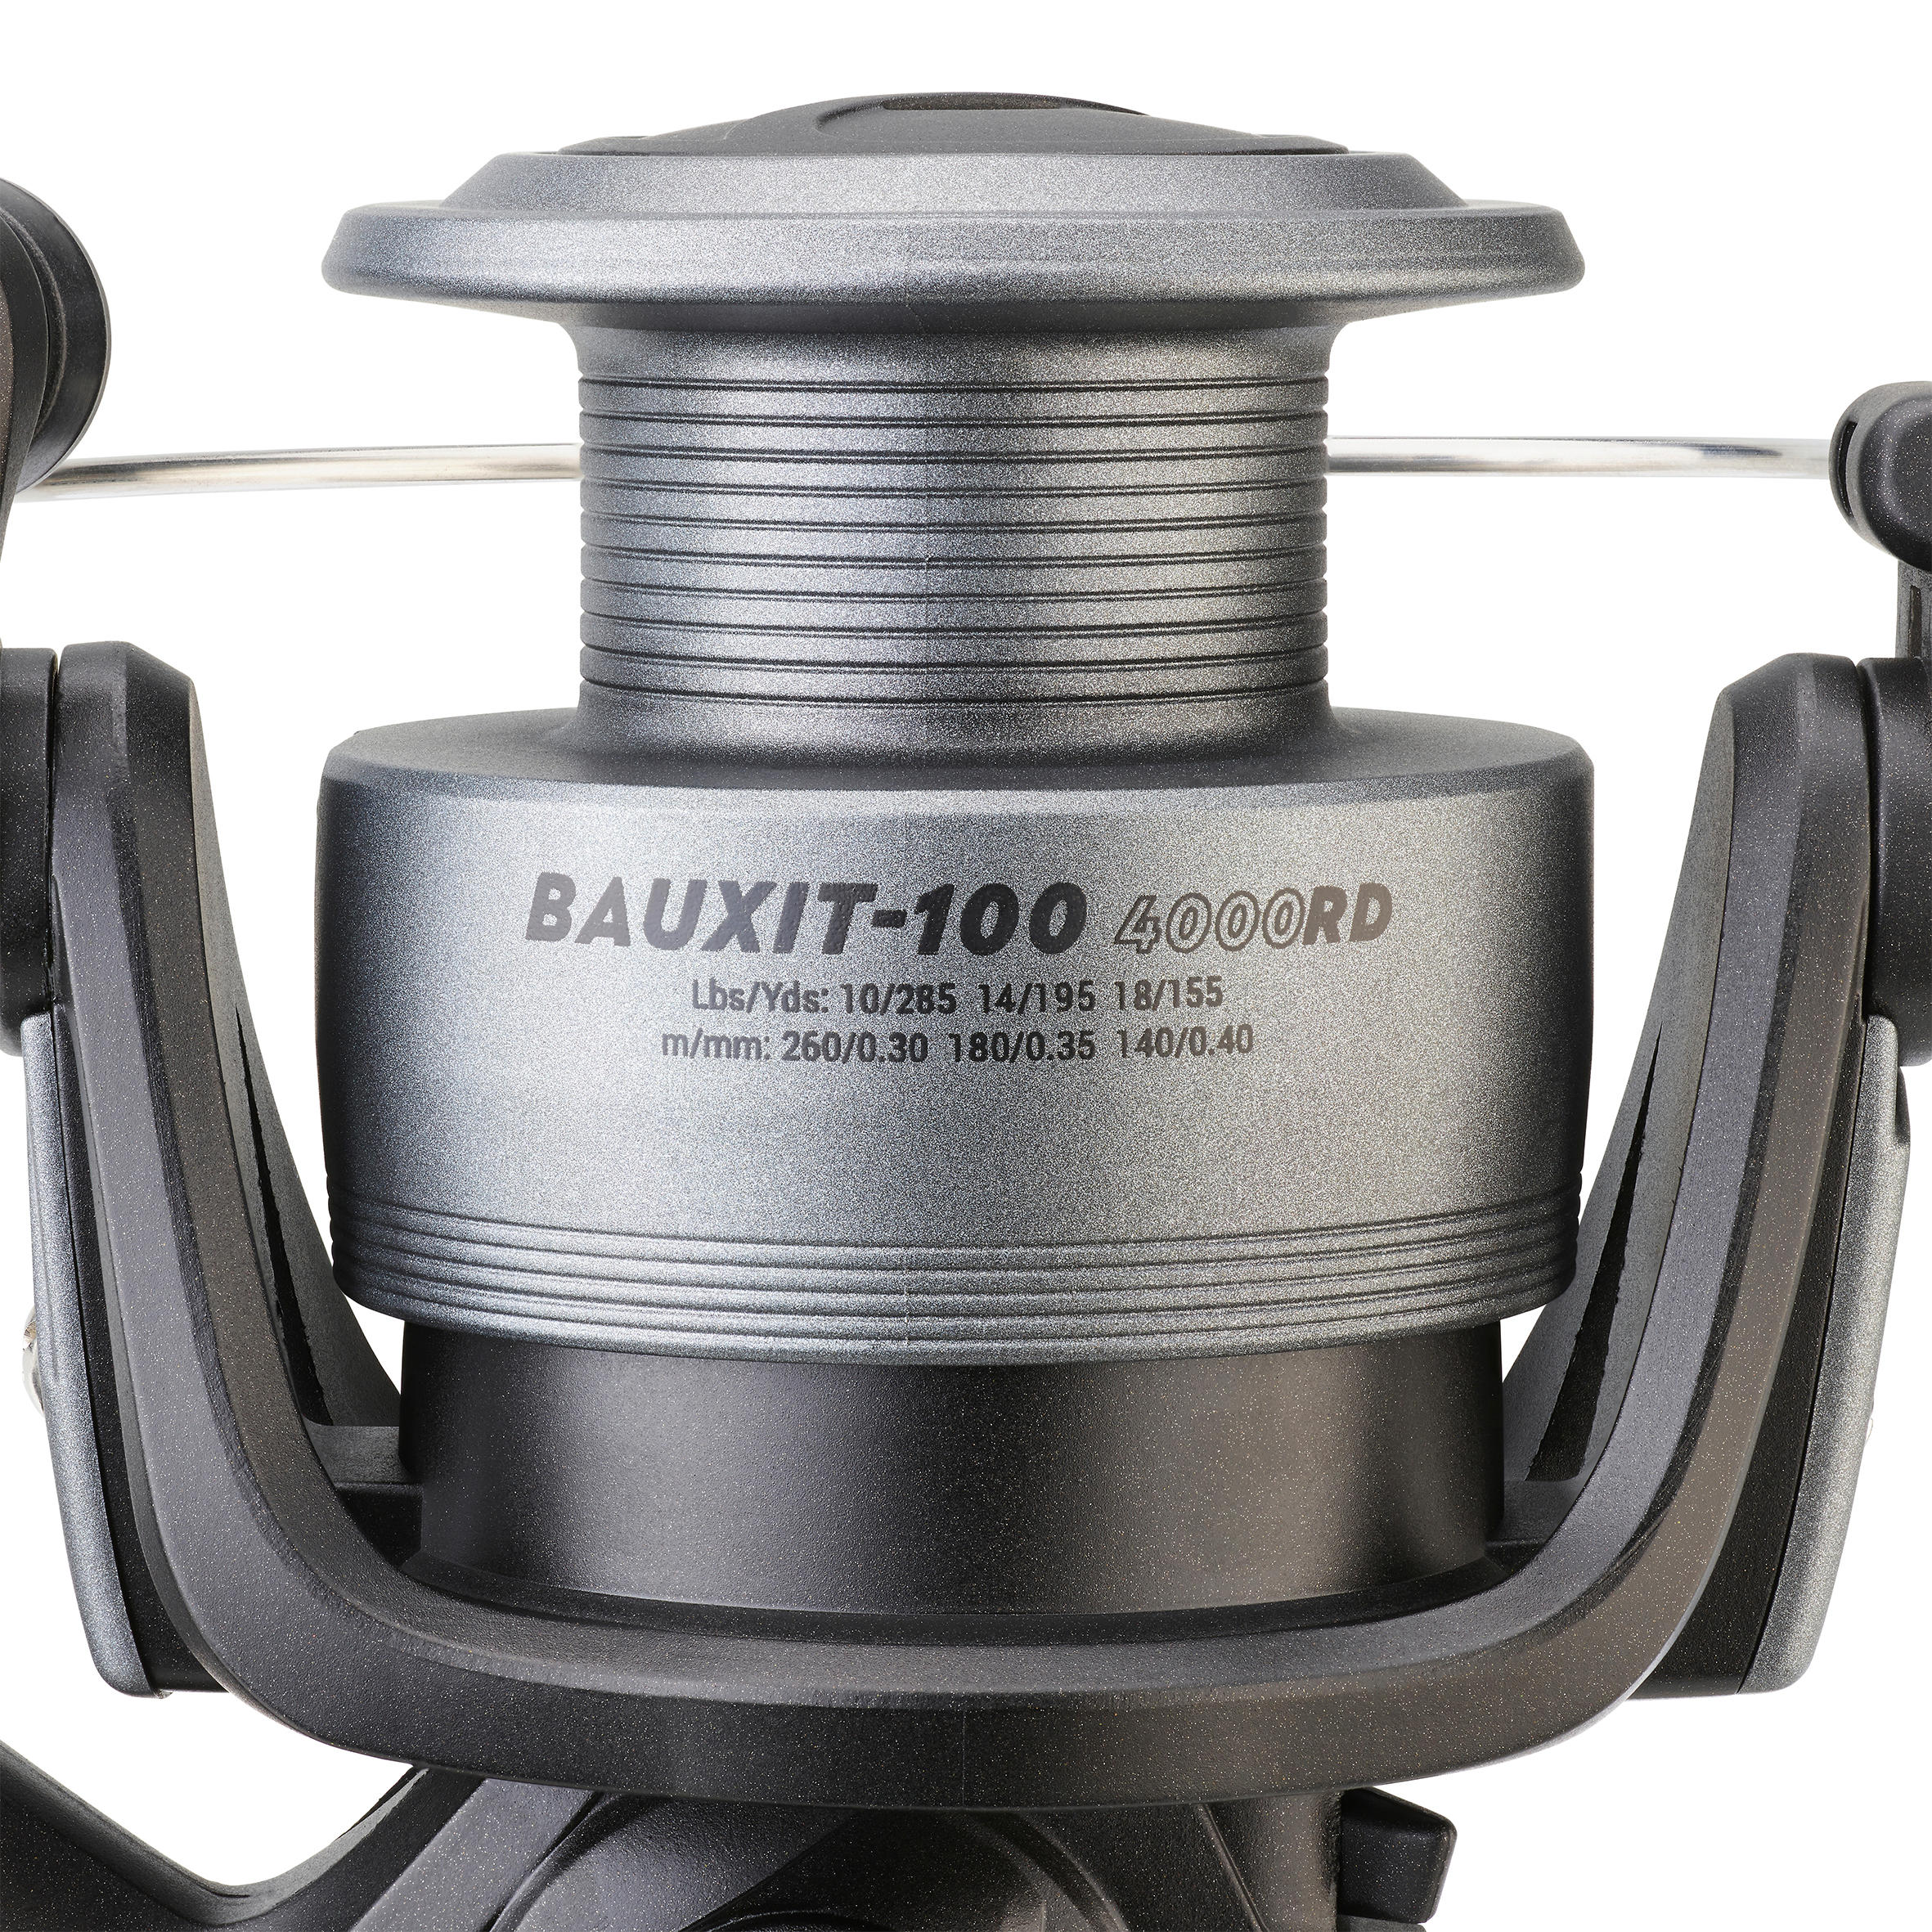 FISHING REEL BAUXIT-100 4000 RD 12/12